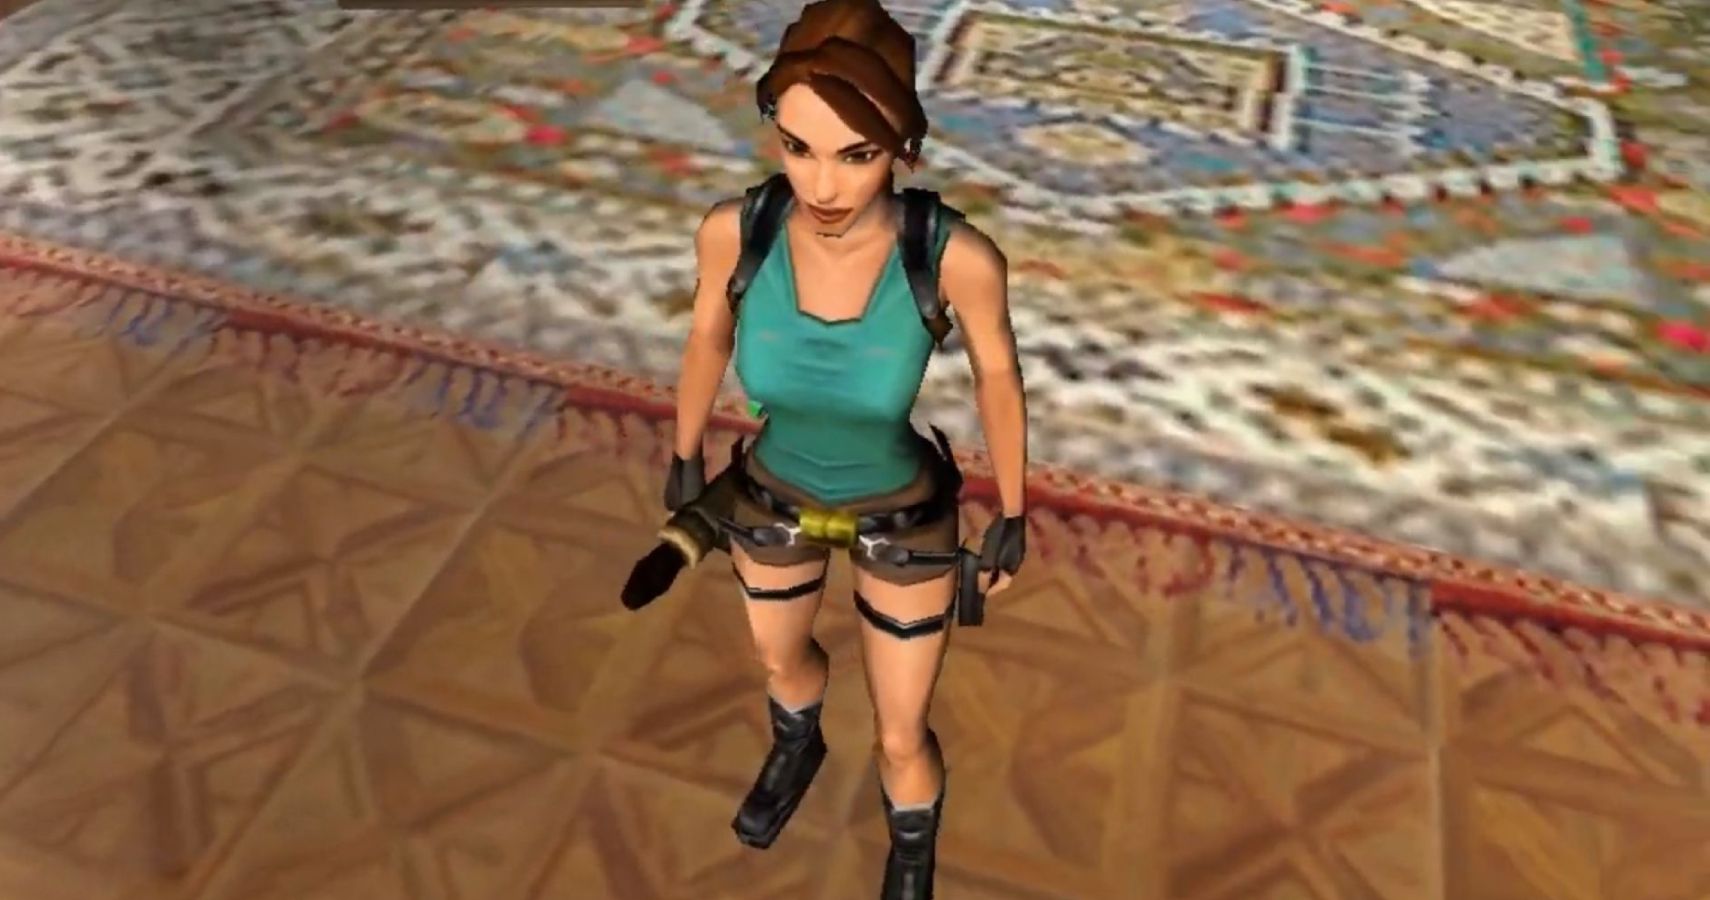 Core Design / Tomb Raider I-II-III Remastered